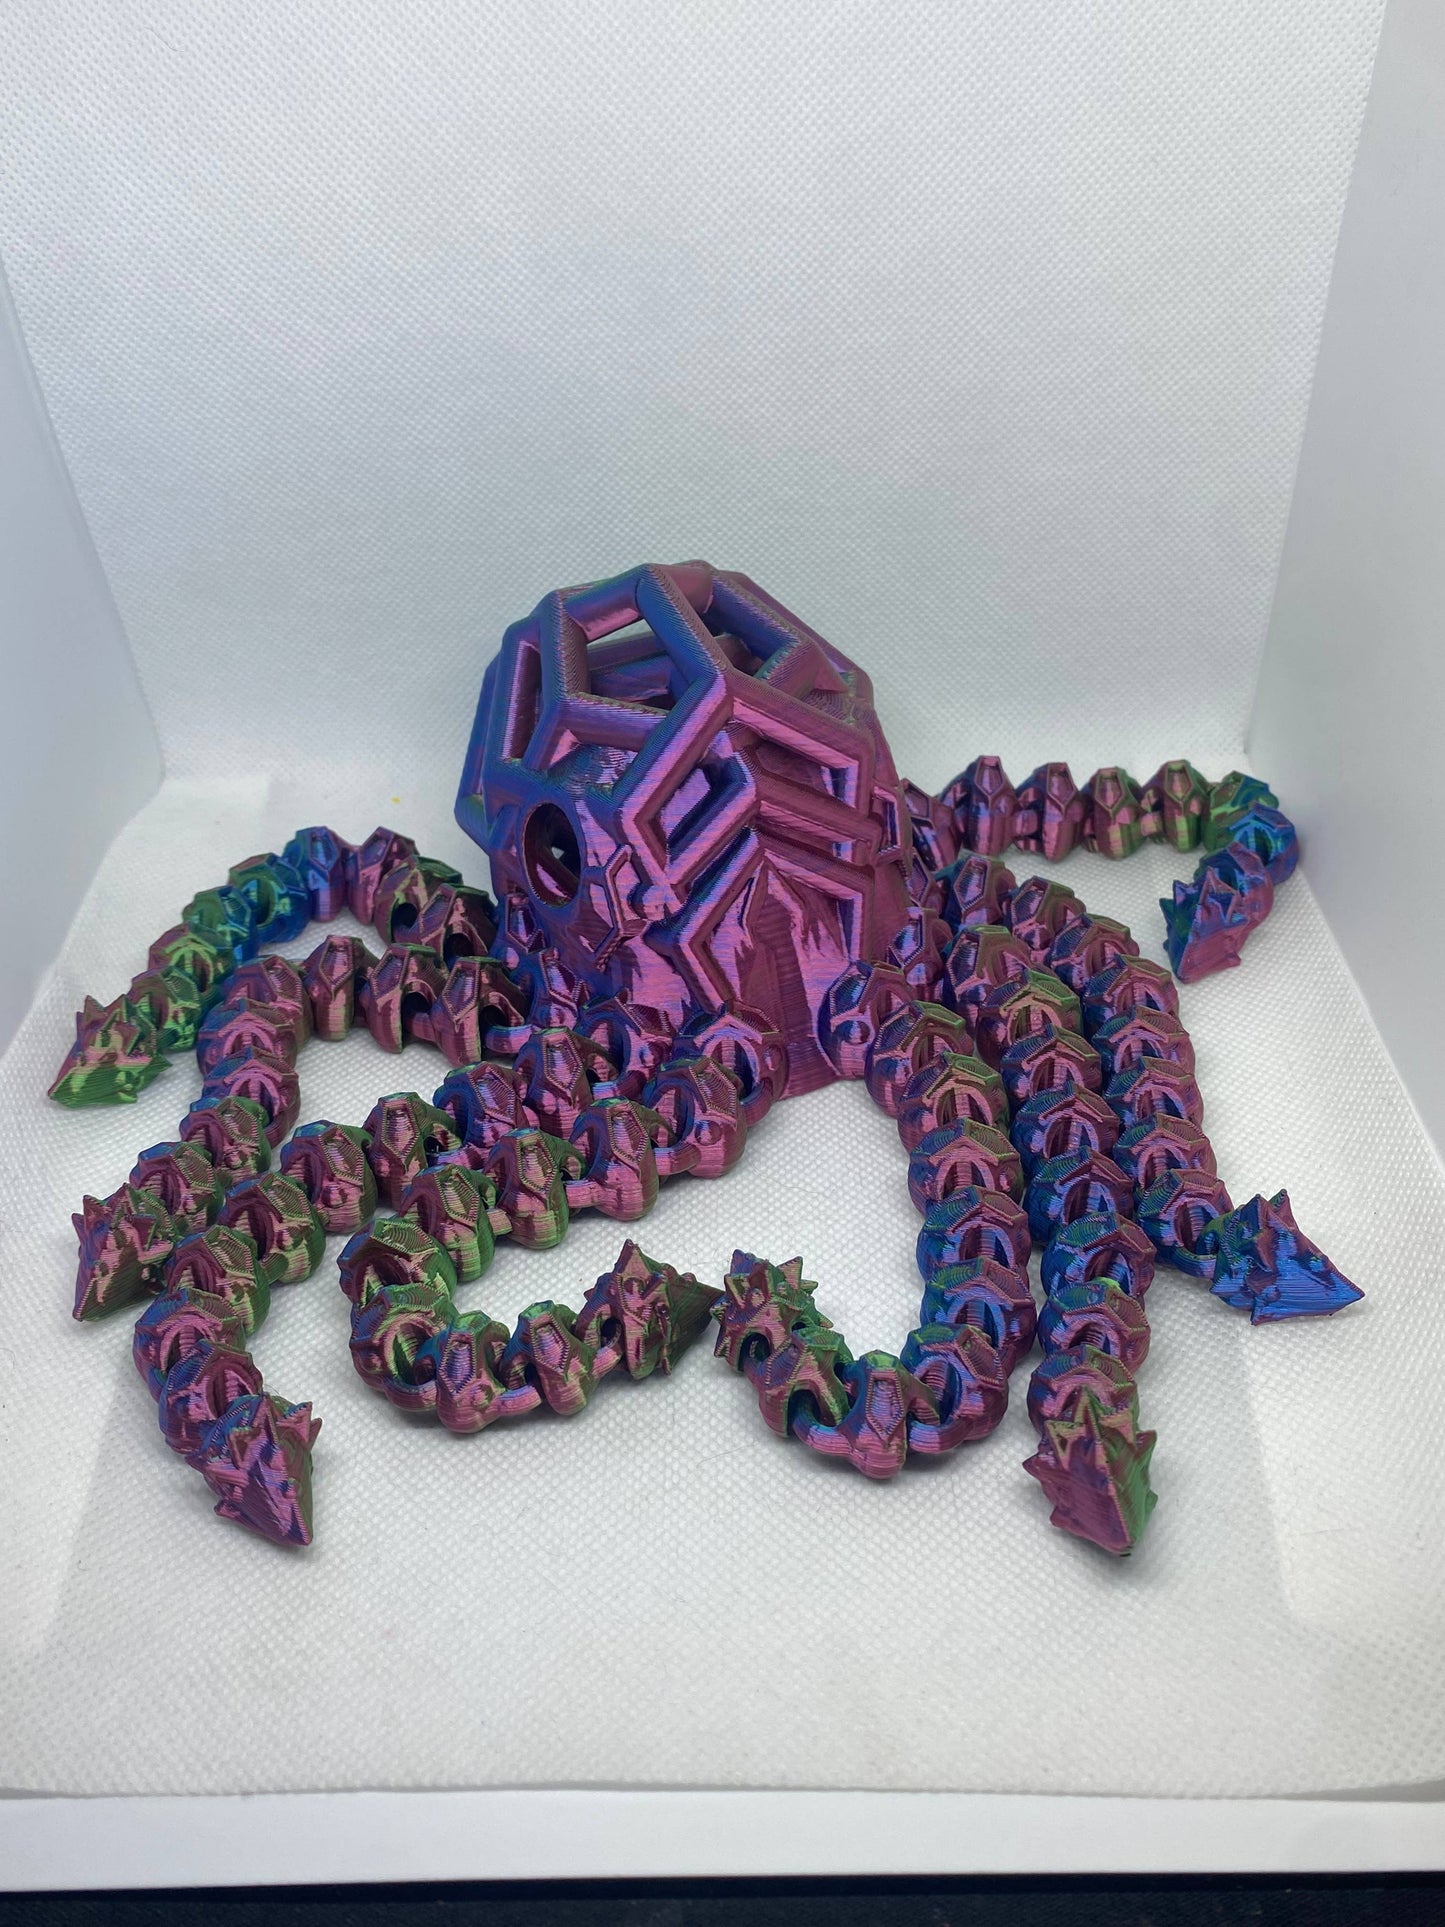 3D printed Void Octopus